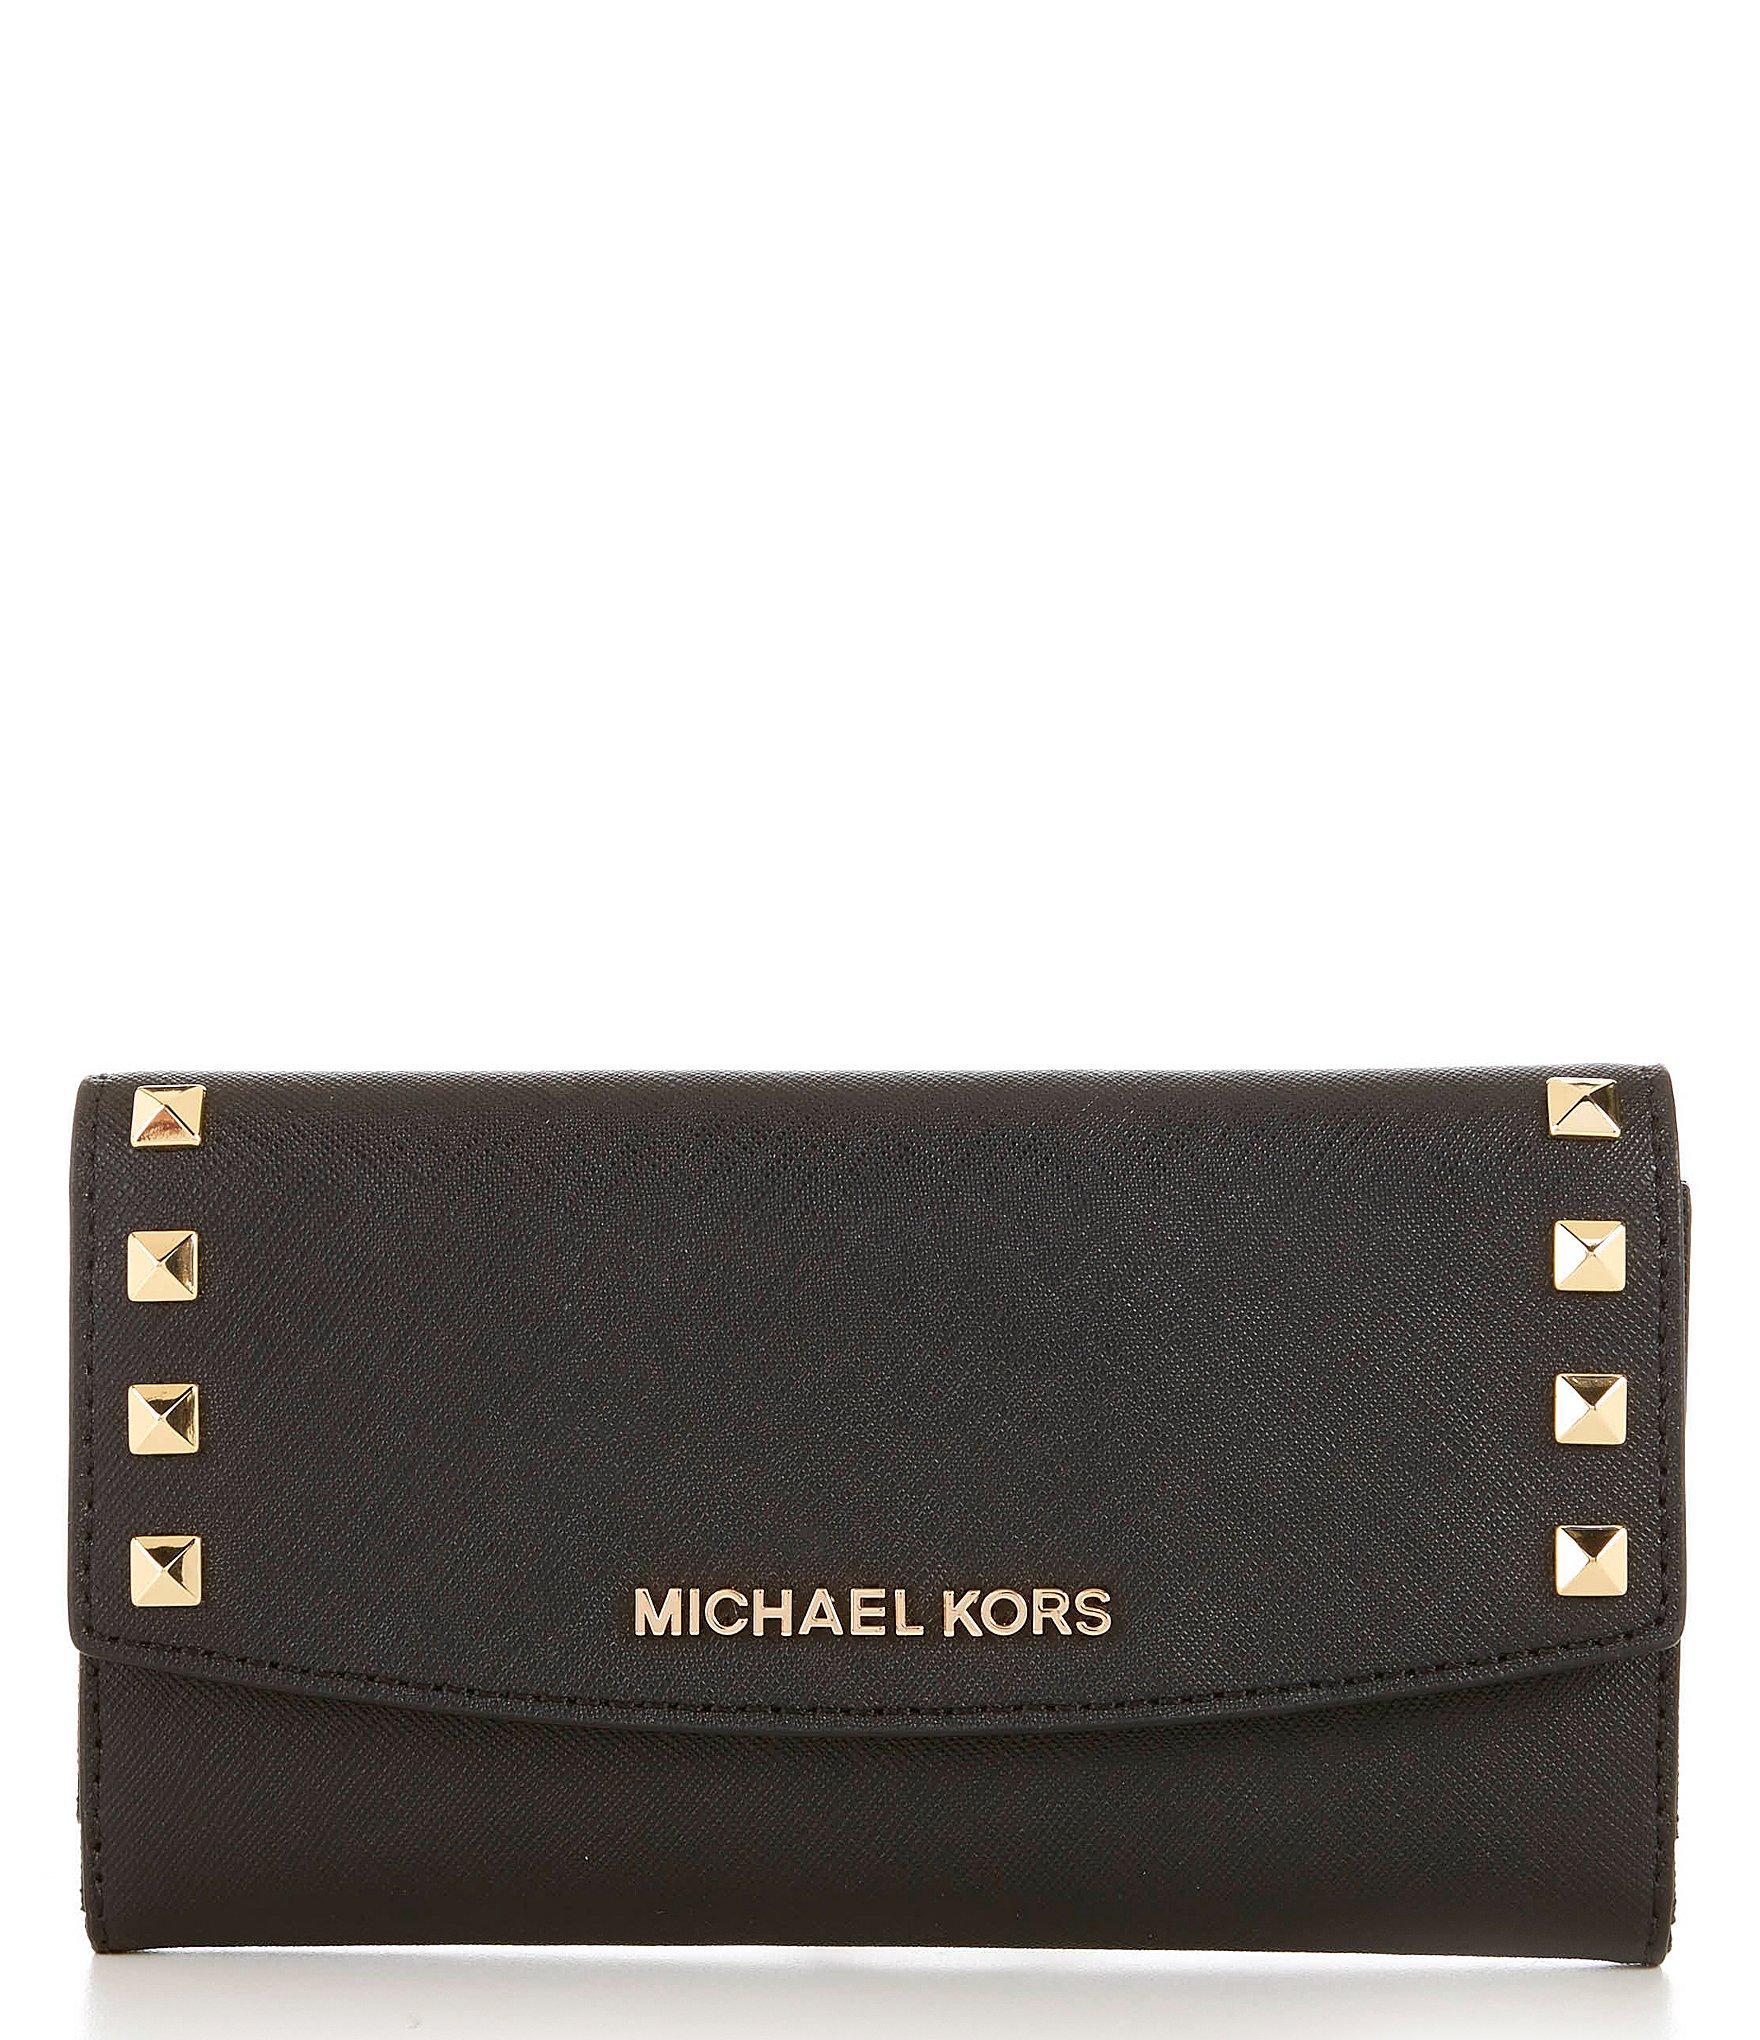 MK studded wallet